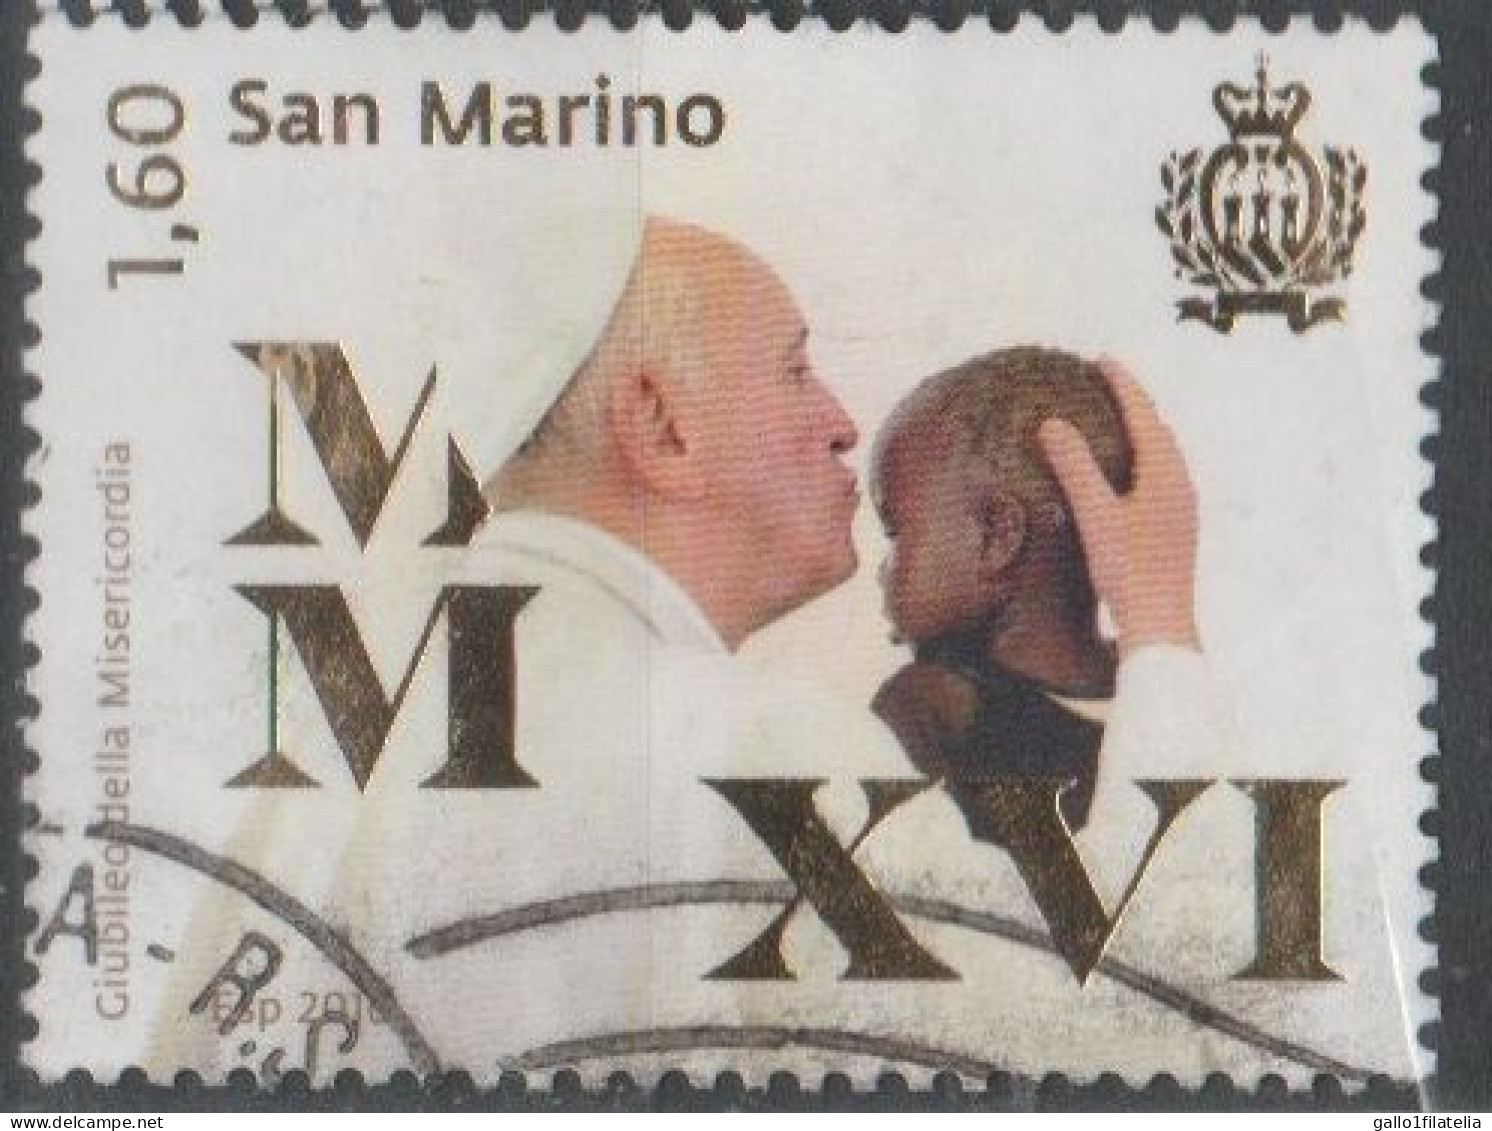 2016 - SAN MARINO - GIUBILEO DELLA MISERICORDIA - JUBILEE OF MERCY - USATO. - Used Stamps